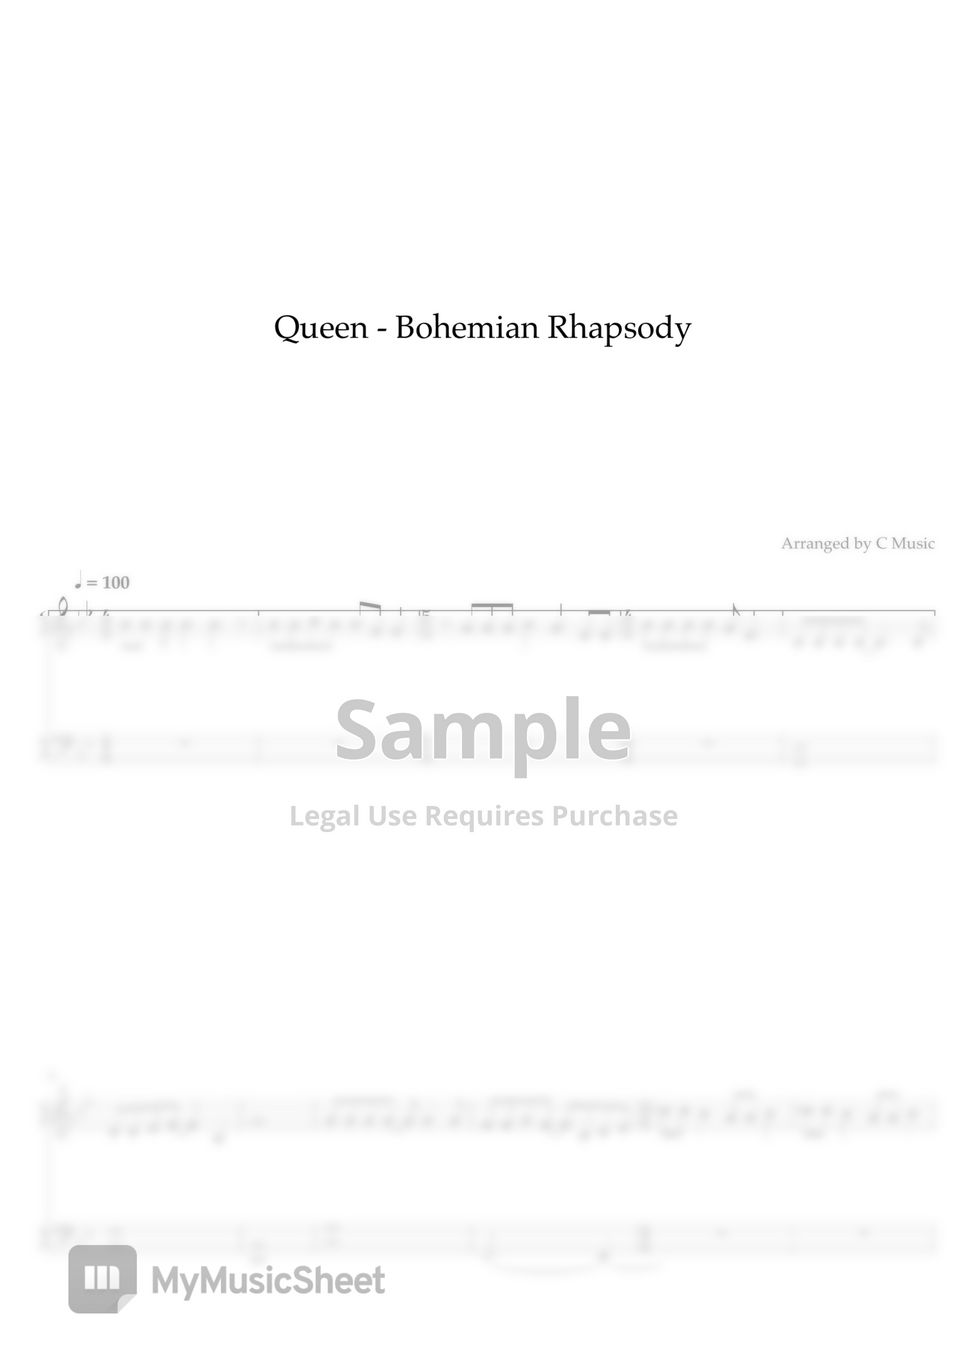 Queen - Bohemian Rhapsody (Easy Version) by C Music